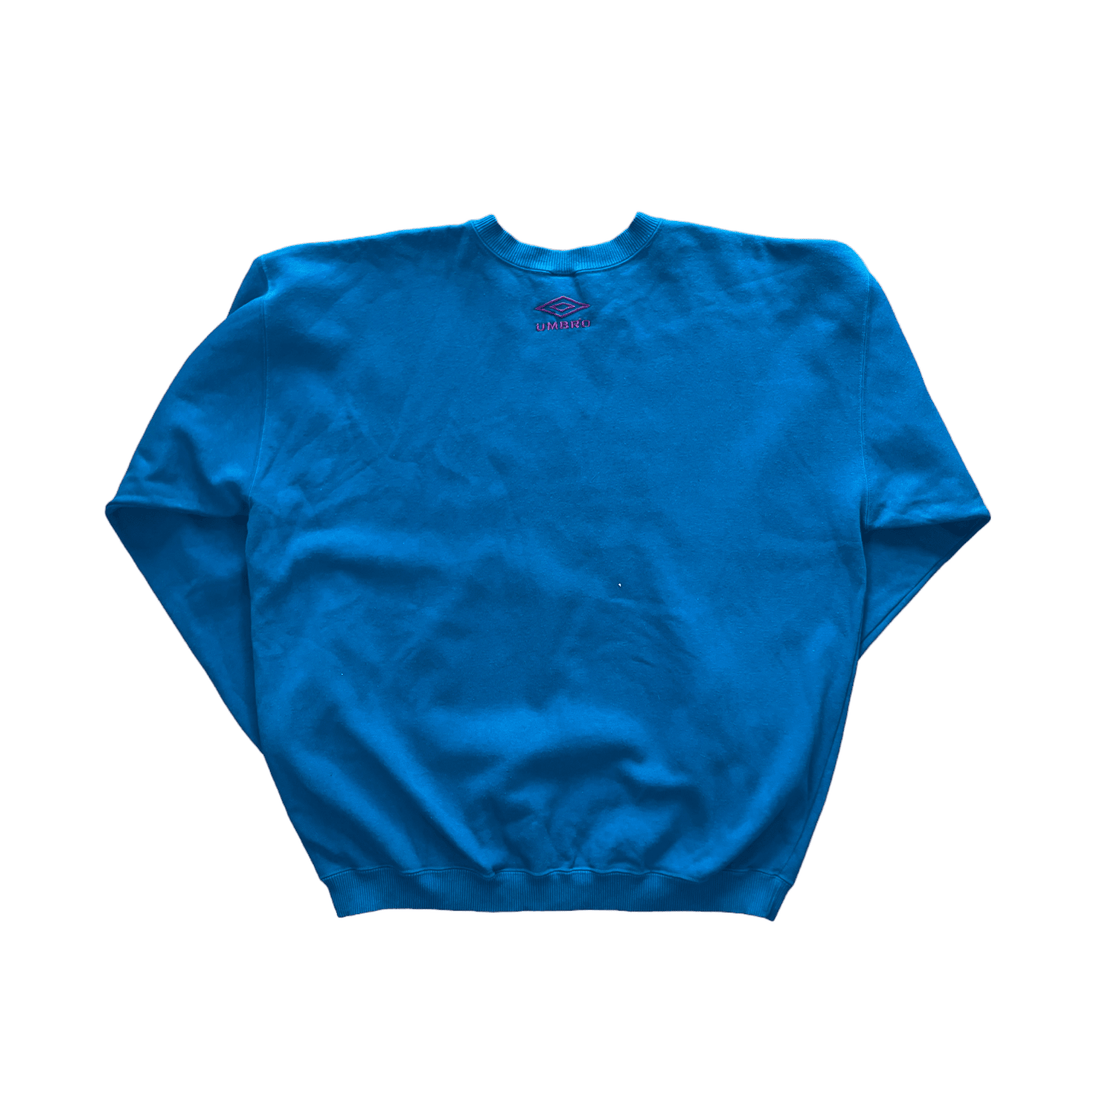 Vintage 90s Blue Umbro Sweatshirt - Large - The Streetwear Studio